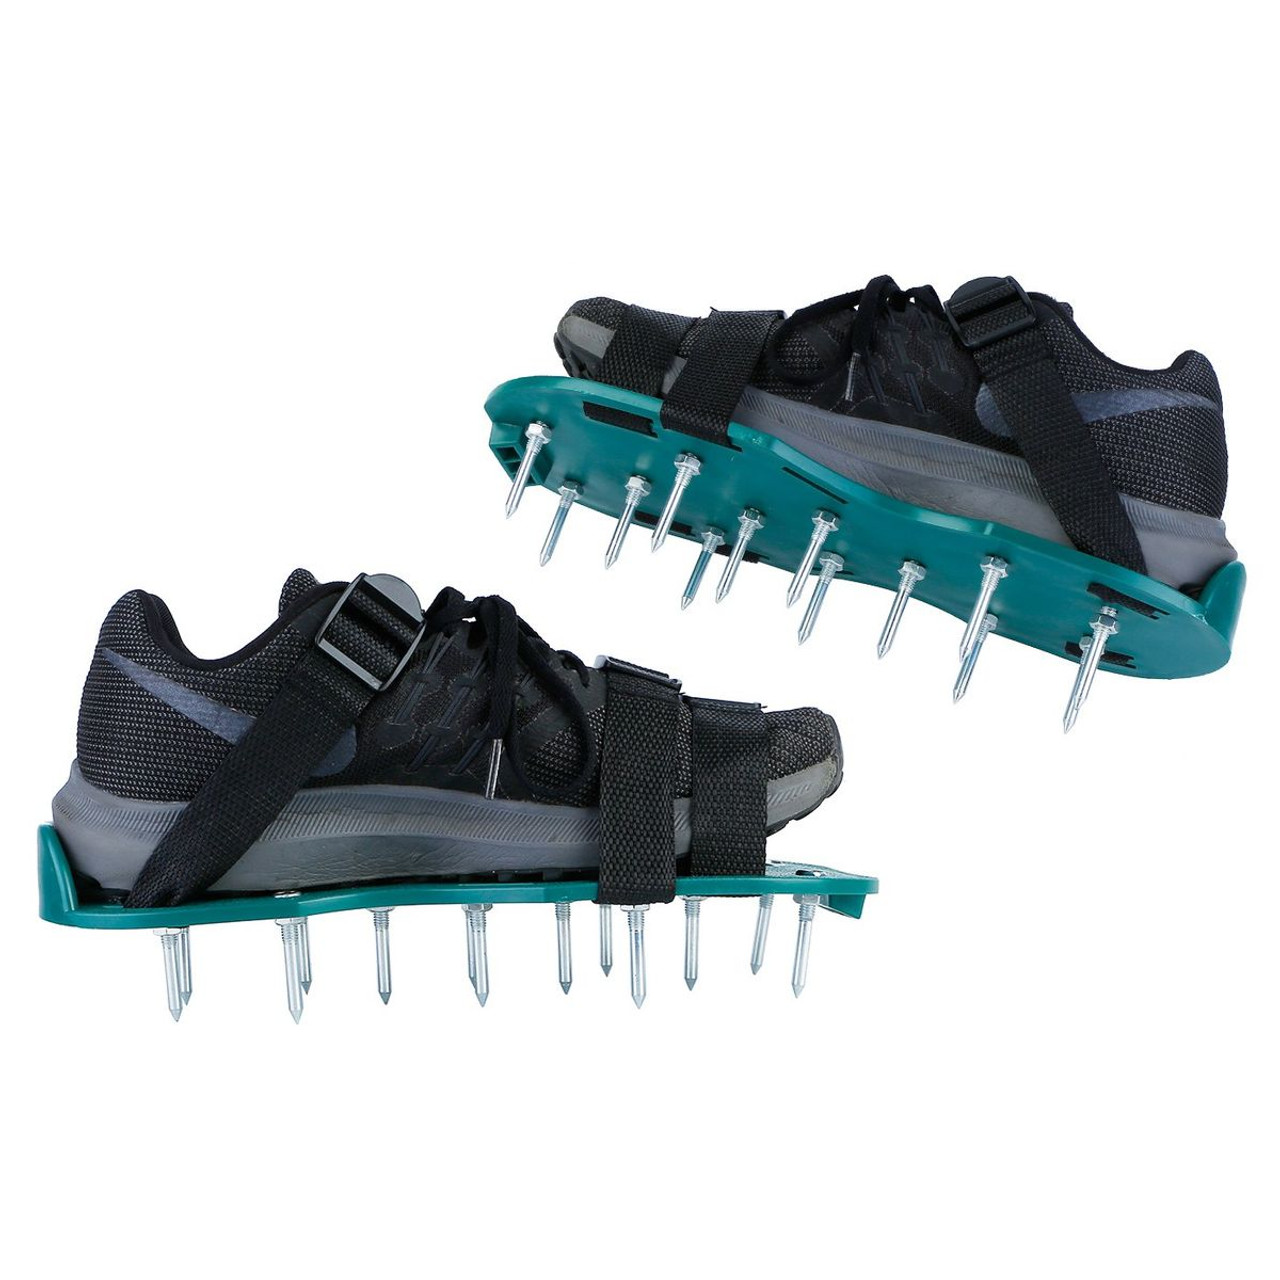 iMounTEK® Lawn Aerator Shoes product image